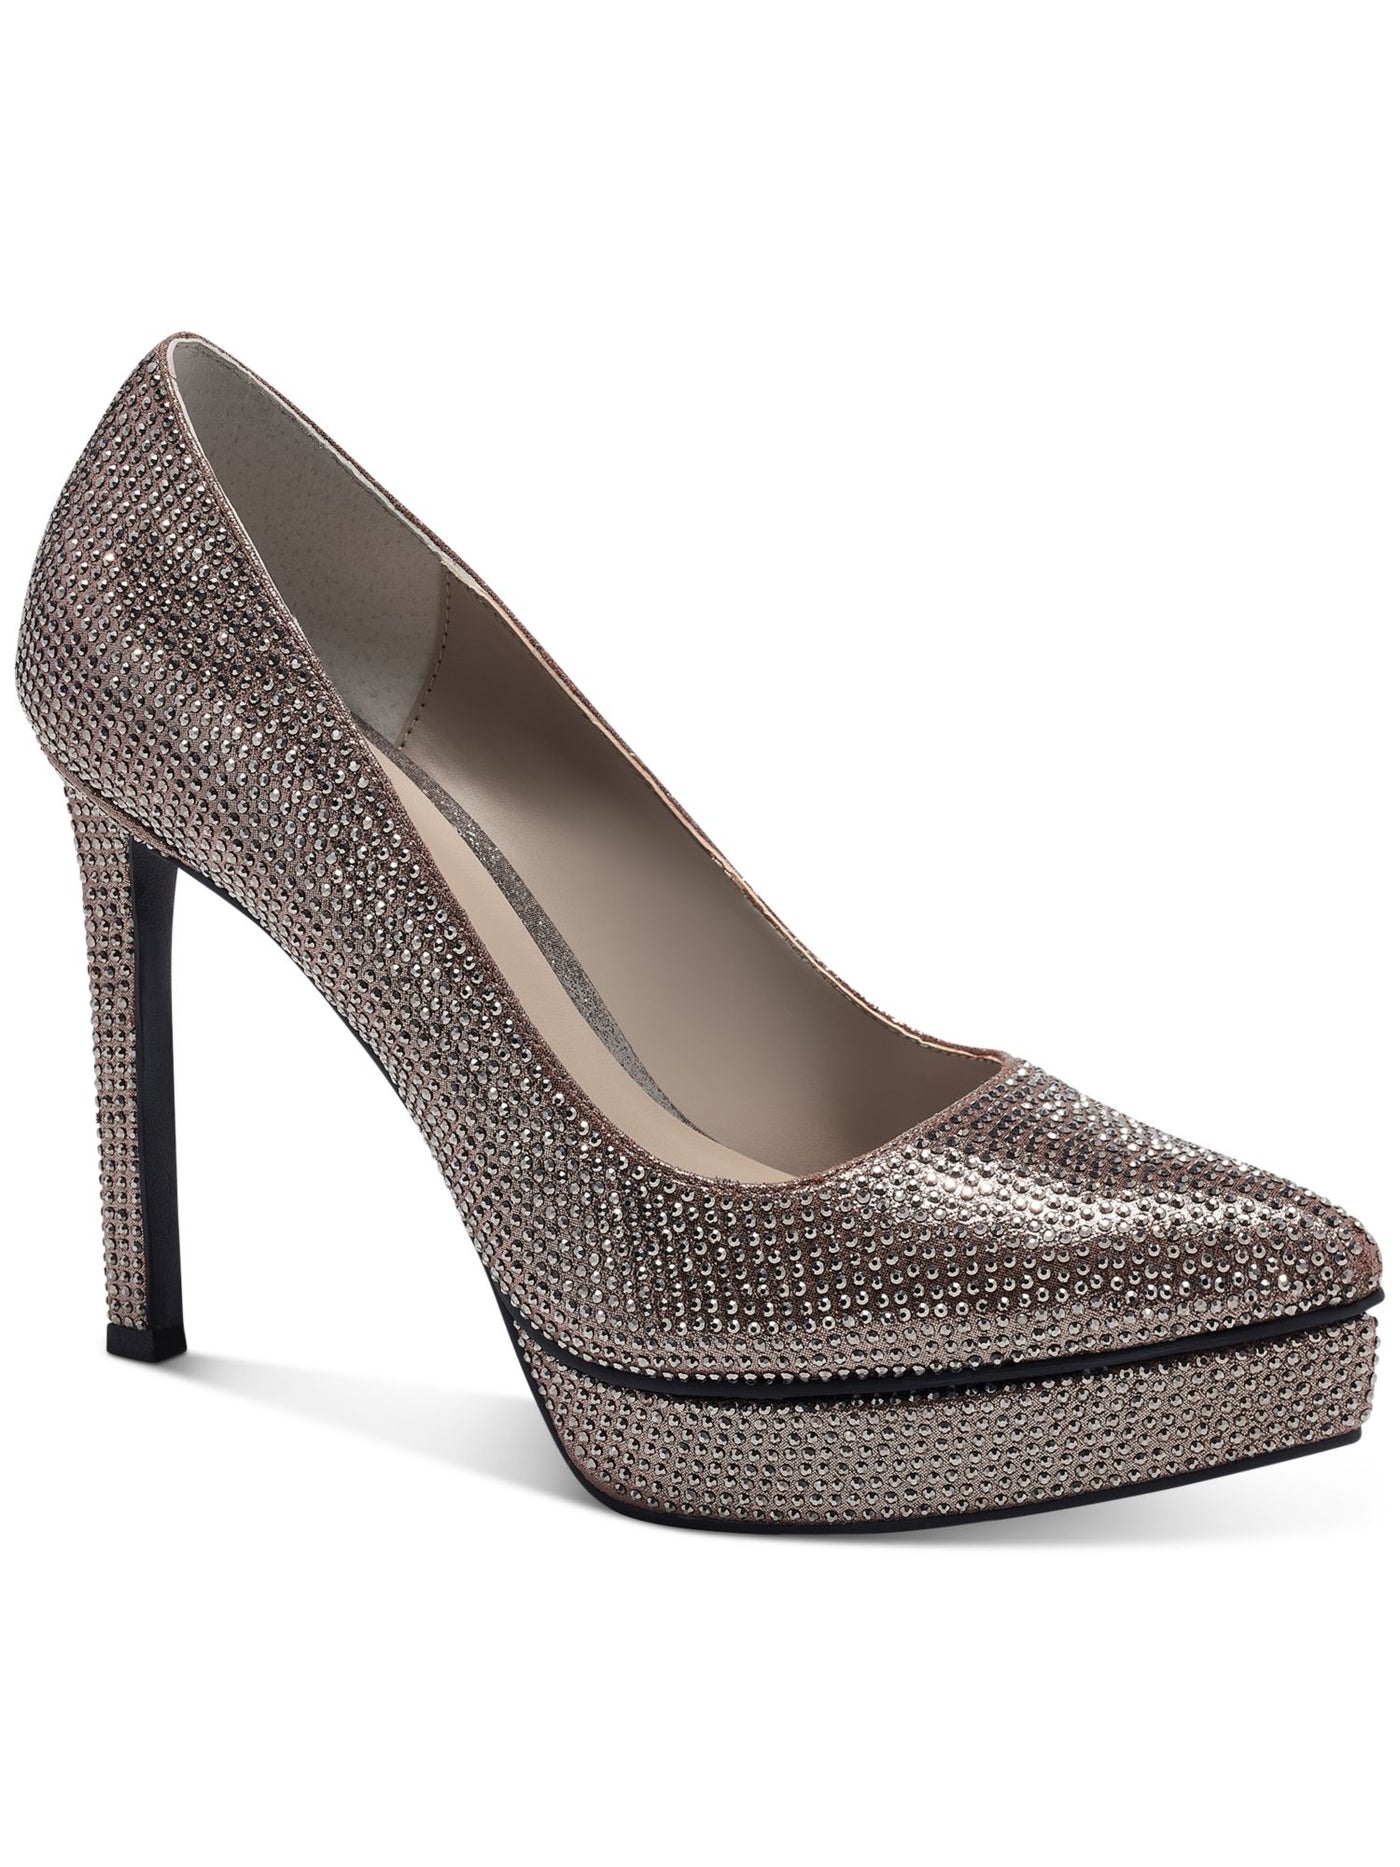 THALIA SODI Womens Brown Padded 1" Platform Metallic Rhinestone Joey Pointed Toe Stiletto Slip On Dress Pumps Shoes 5.5 M